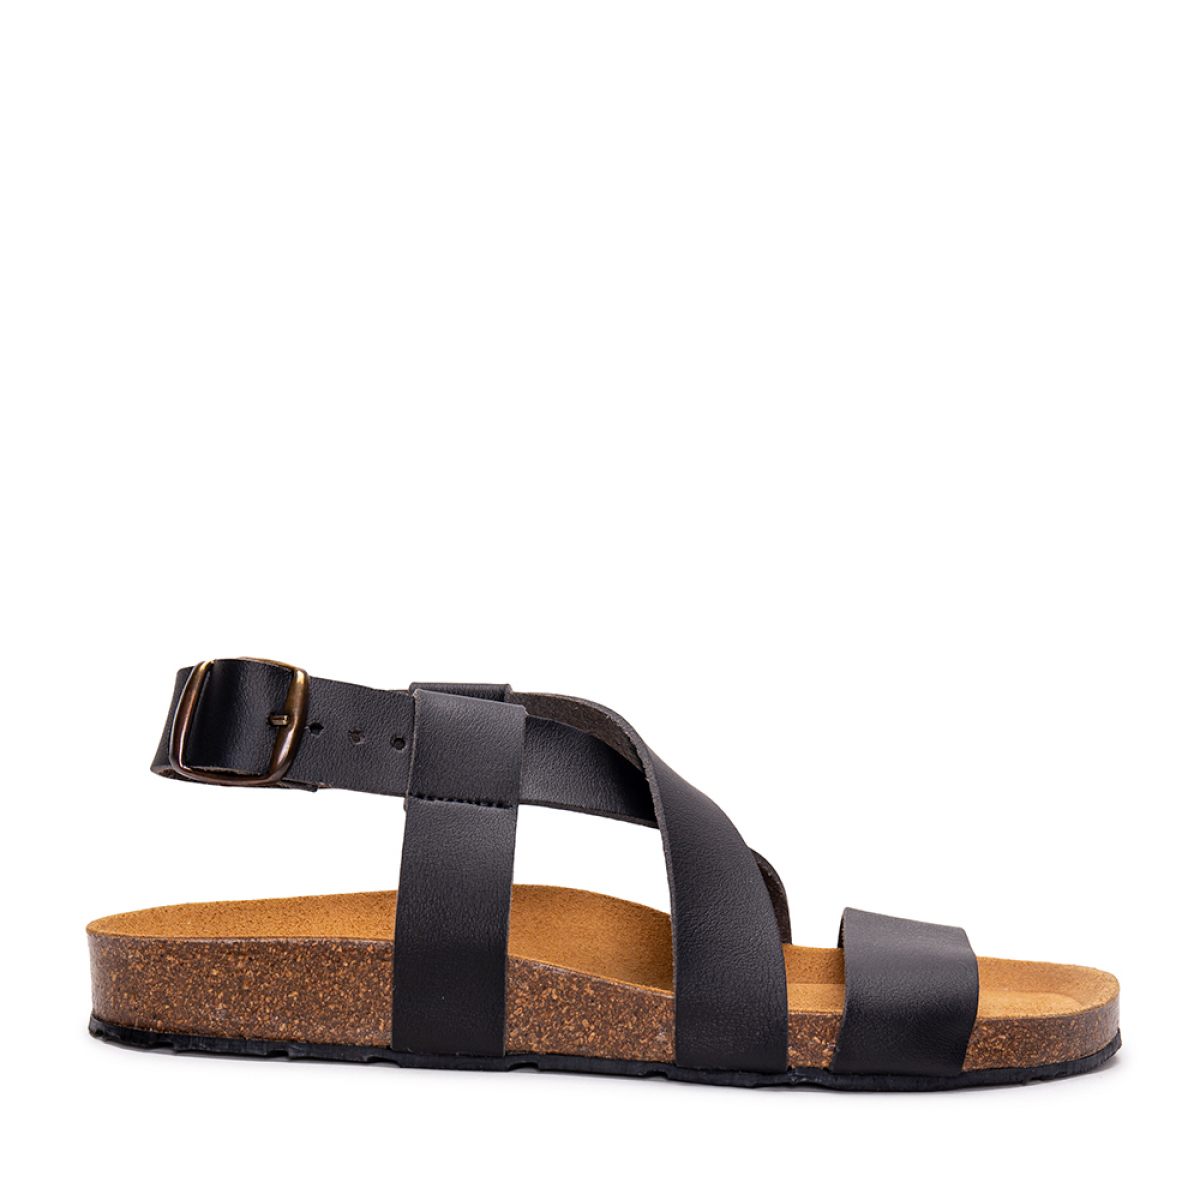 Men's Summer Faux Leather Sandals Open Toe Lace Up Casual Shoes Non-slip  Sandals | eBay